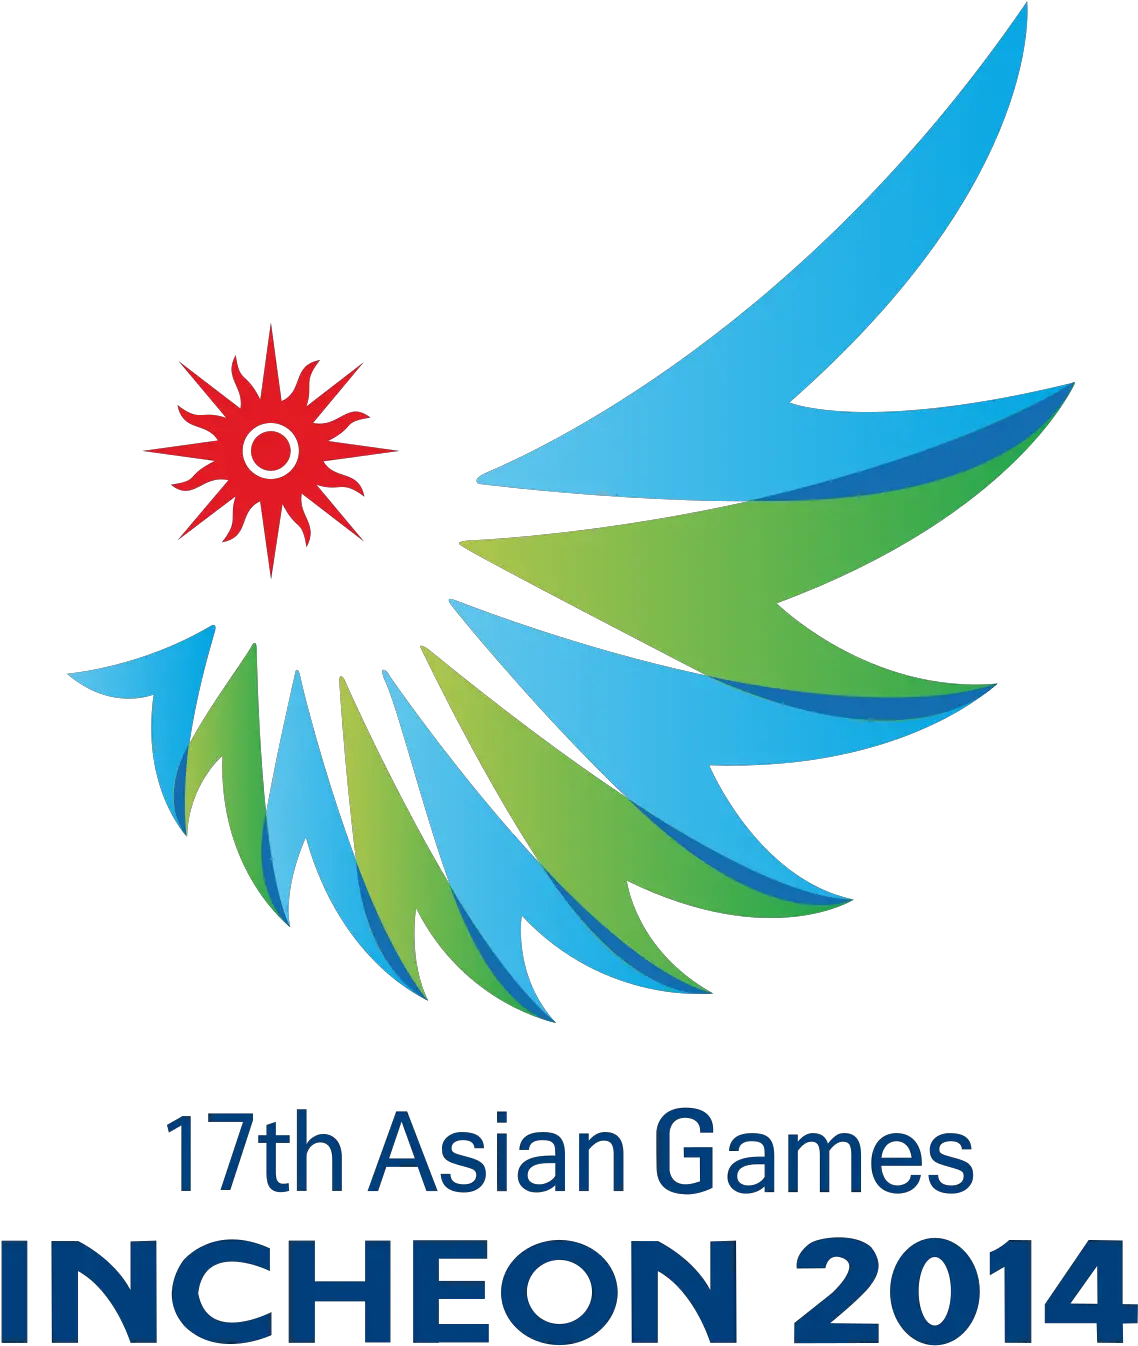 September 2014 Vincent Loyu0027s Online Journal 17th Asian Games Incheon 2014 Png Kaya Scodelario Gif Icon